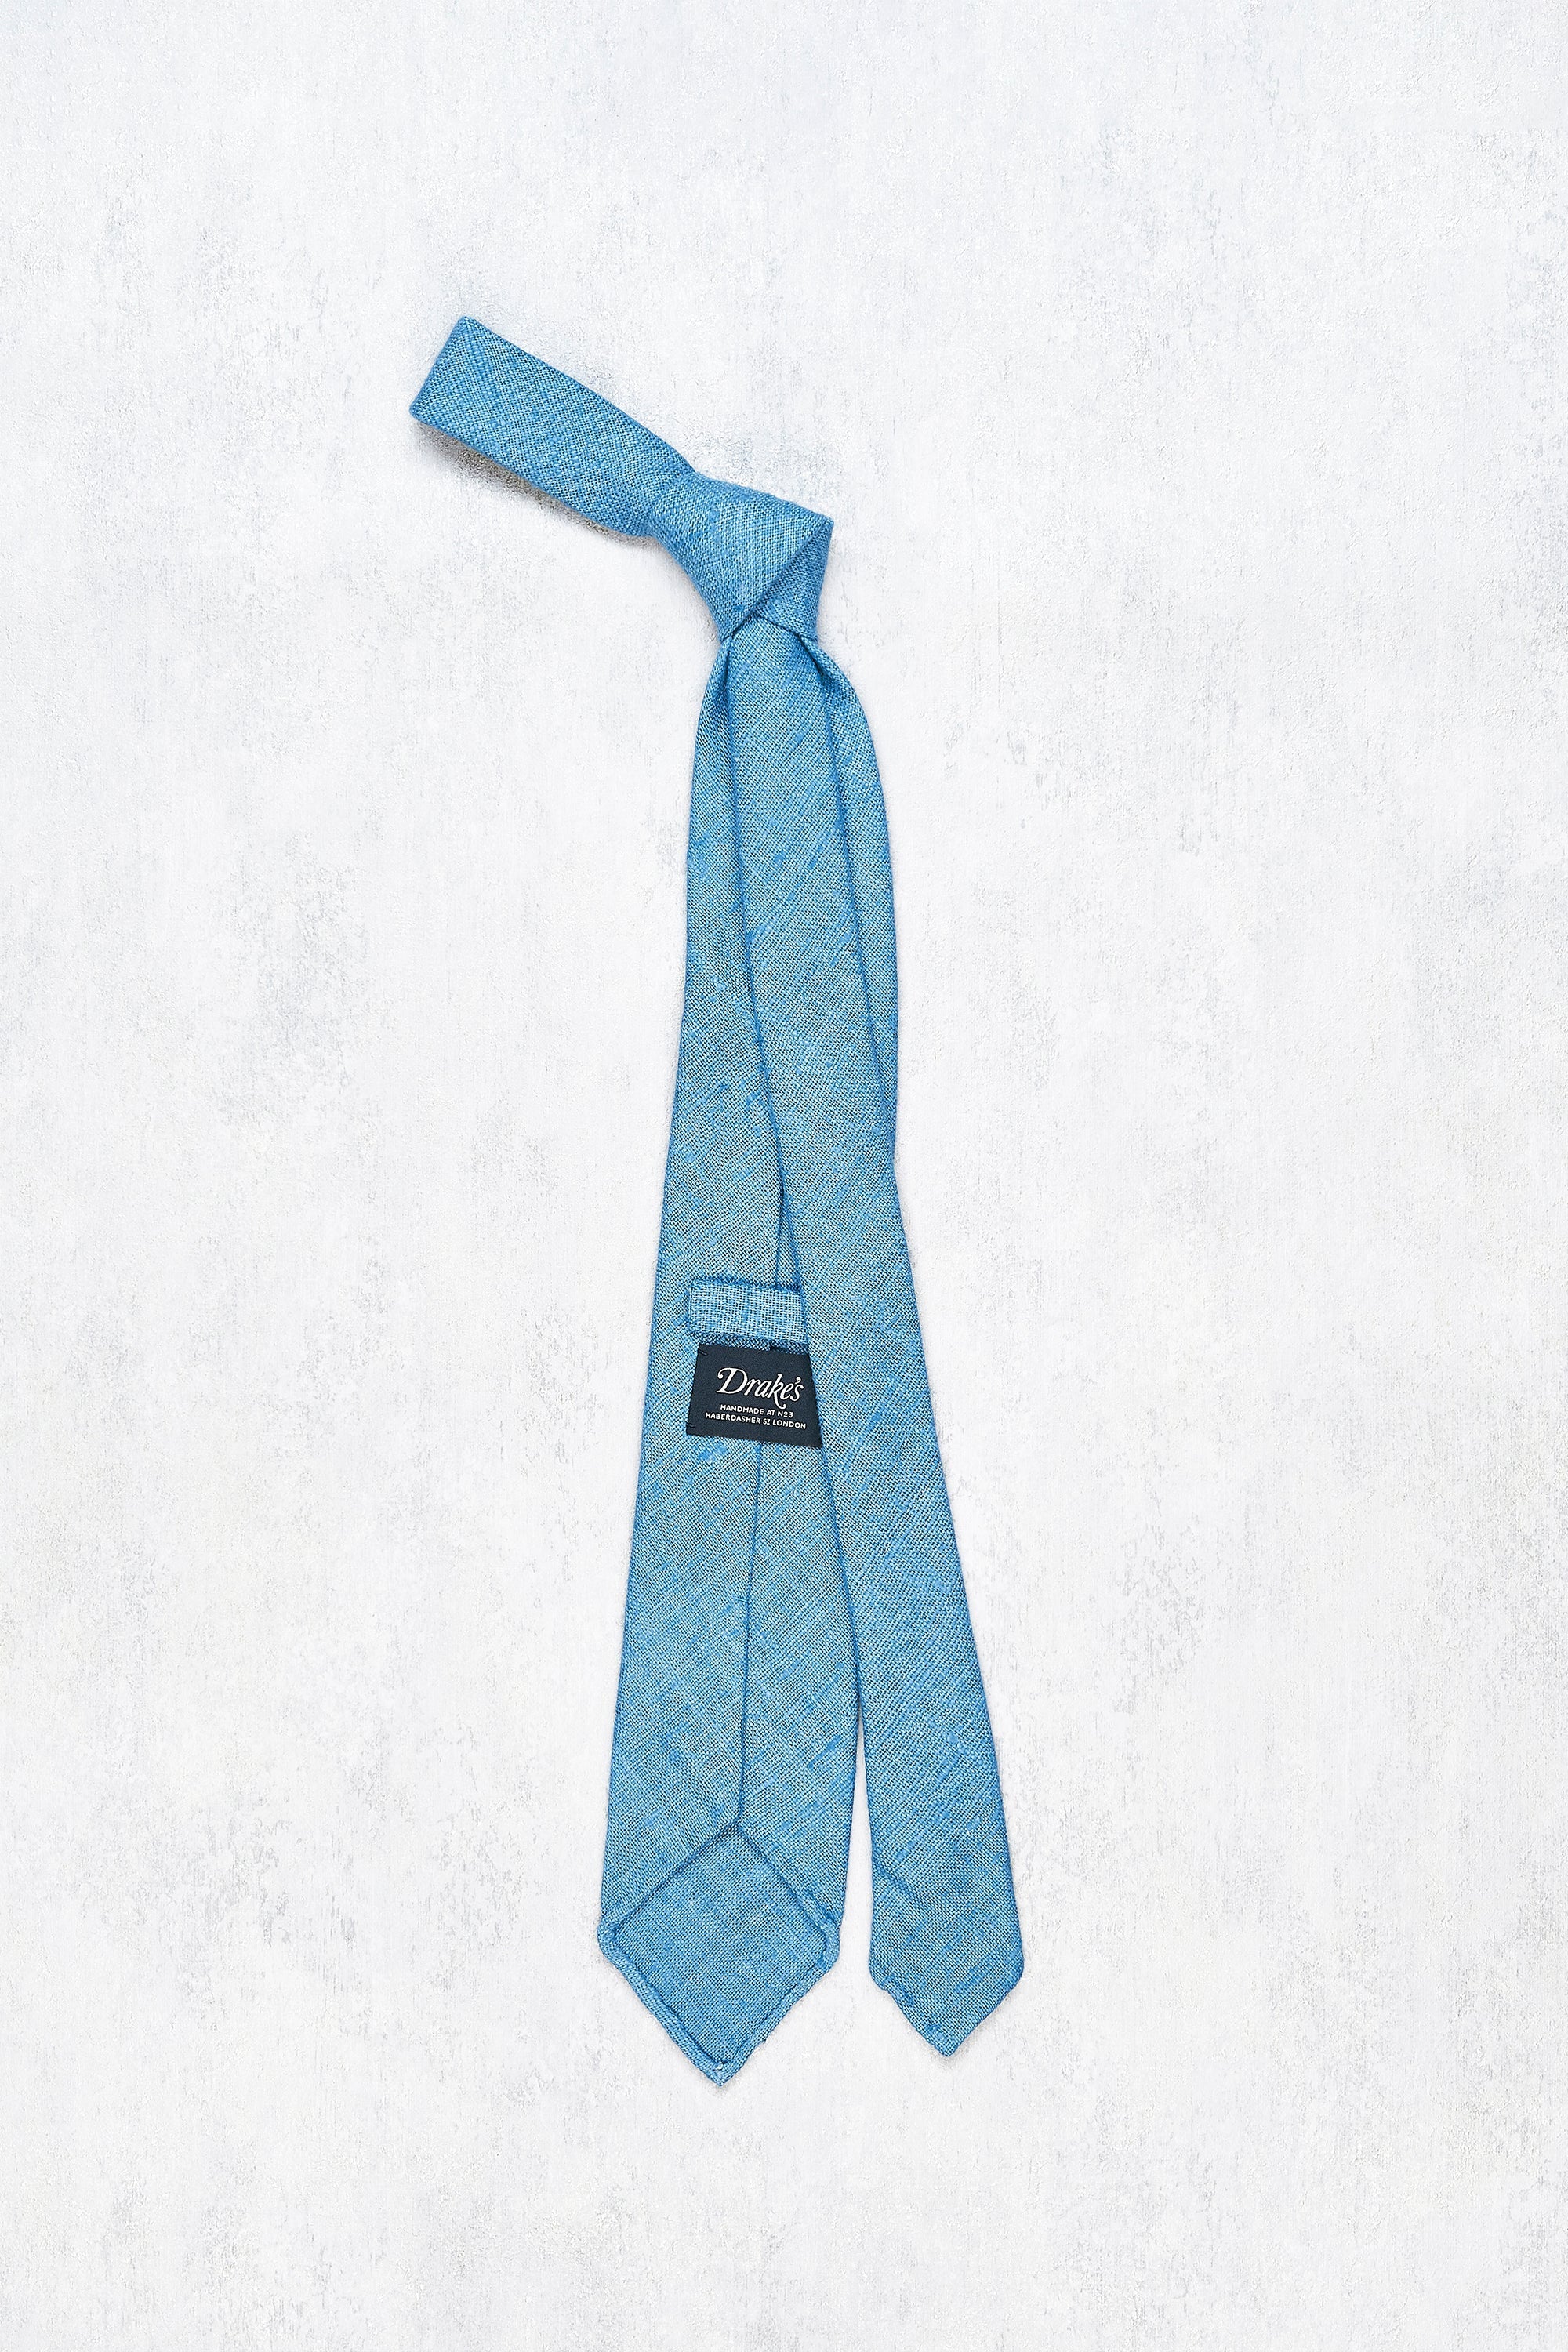 Drake's Light Blue Silk Tie